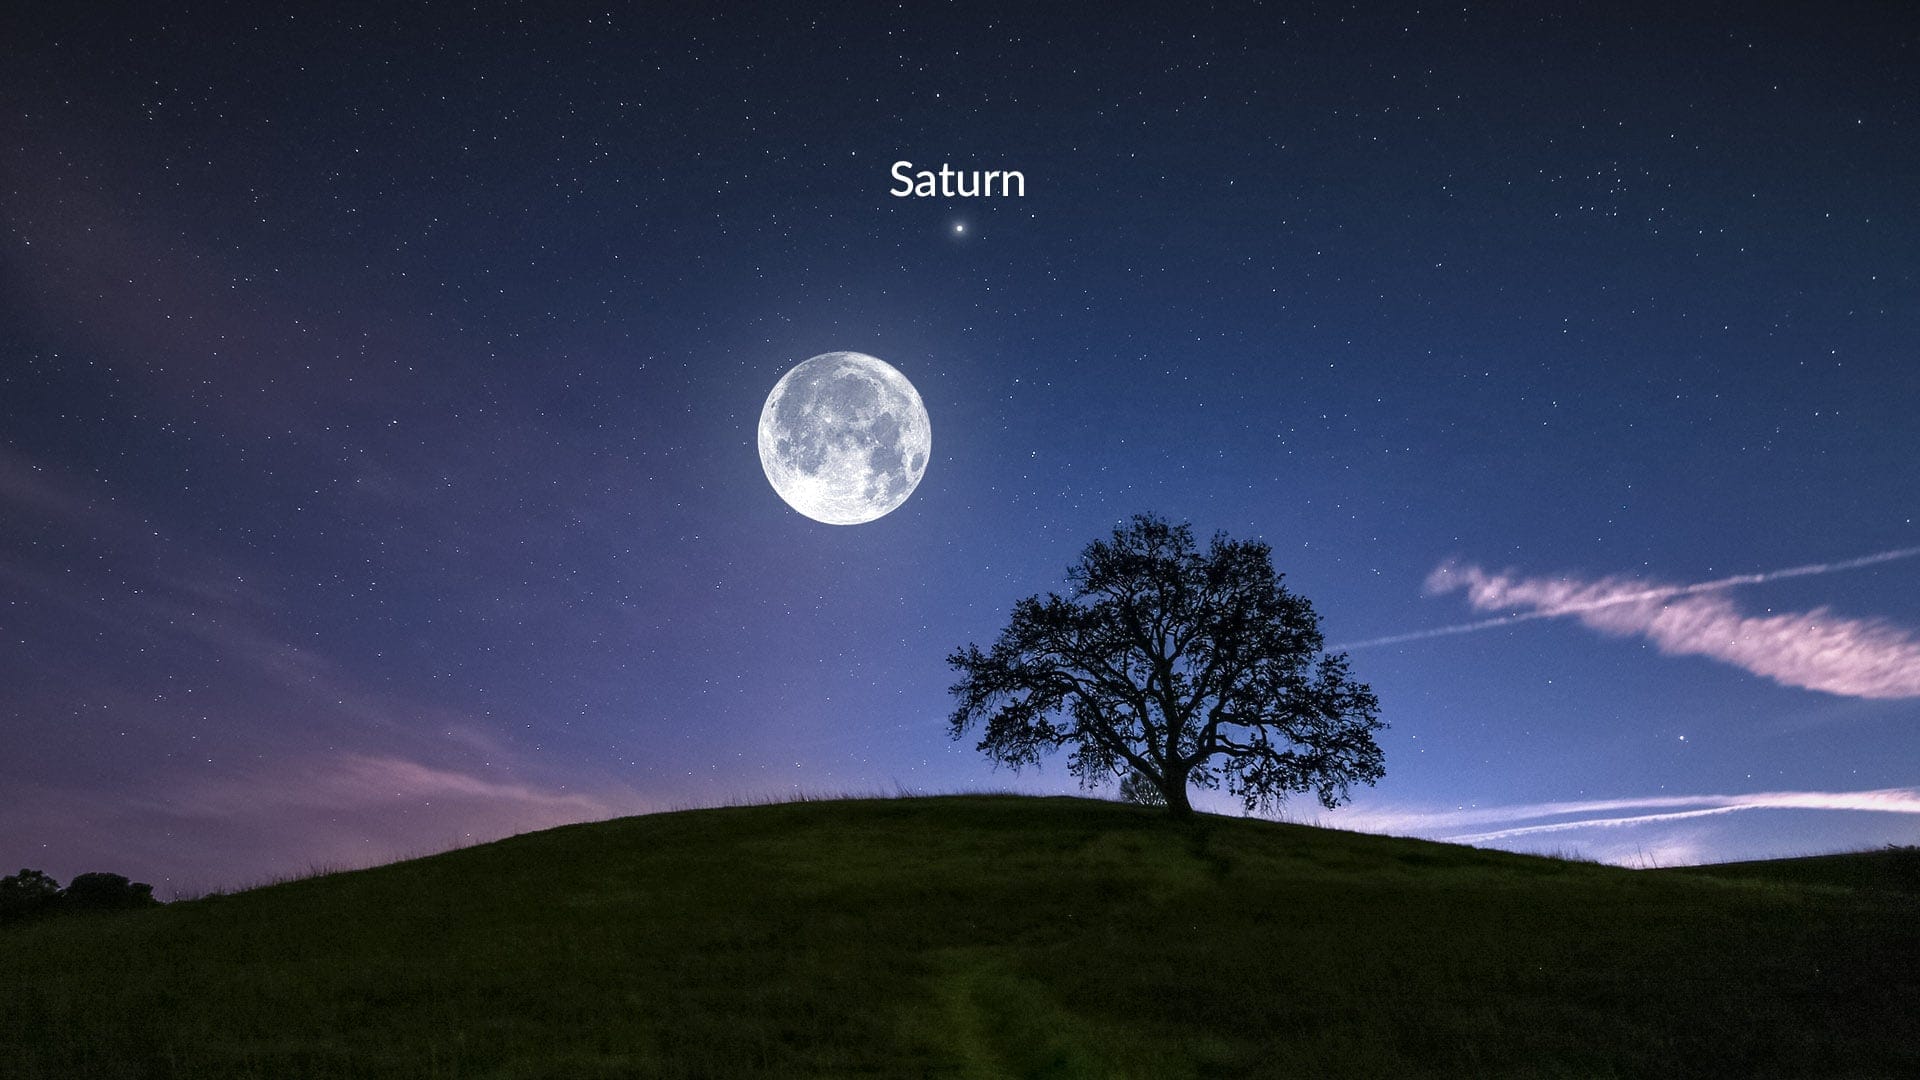 Moon-Saturn conjunction in August 2022